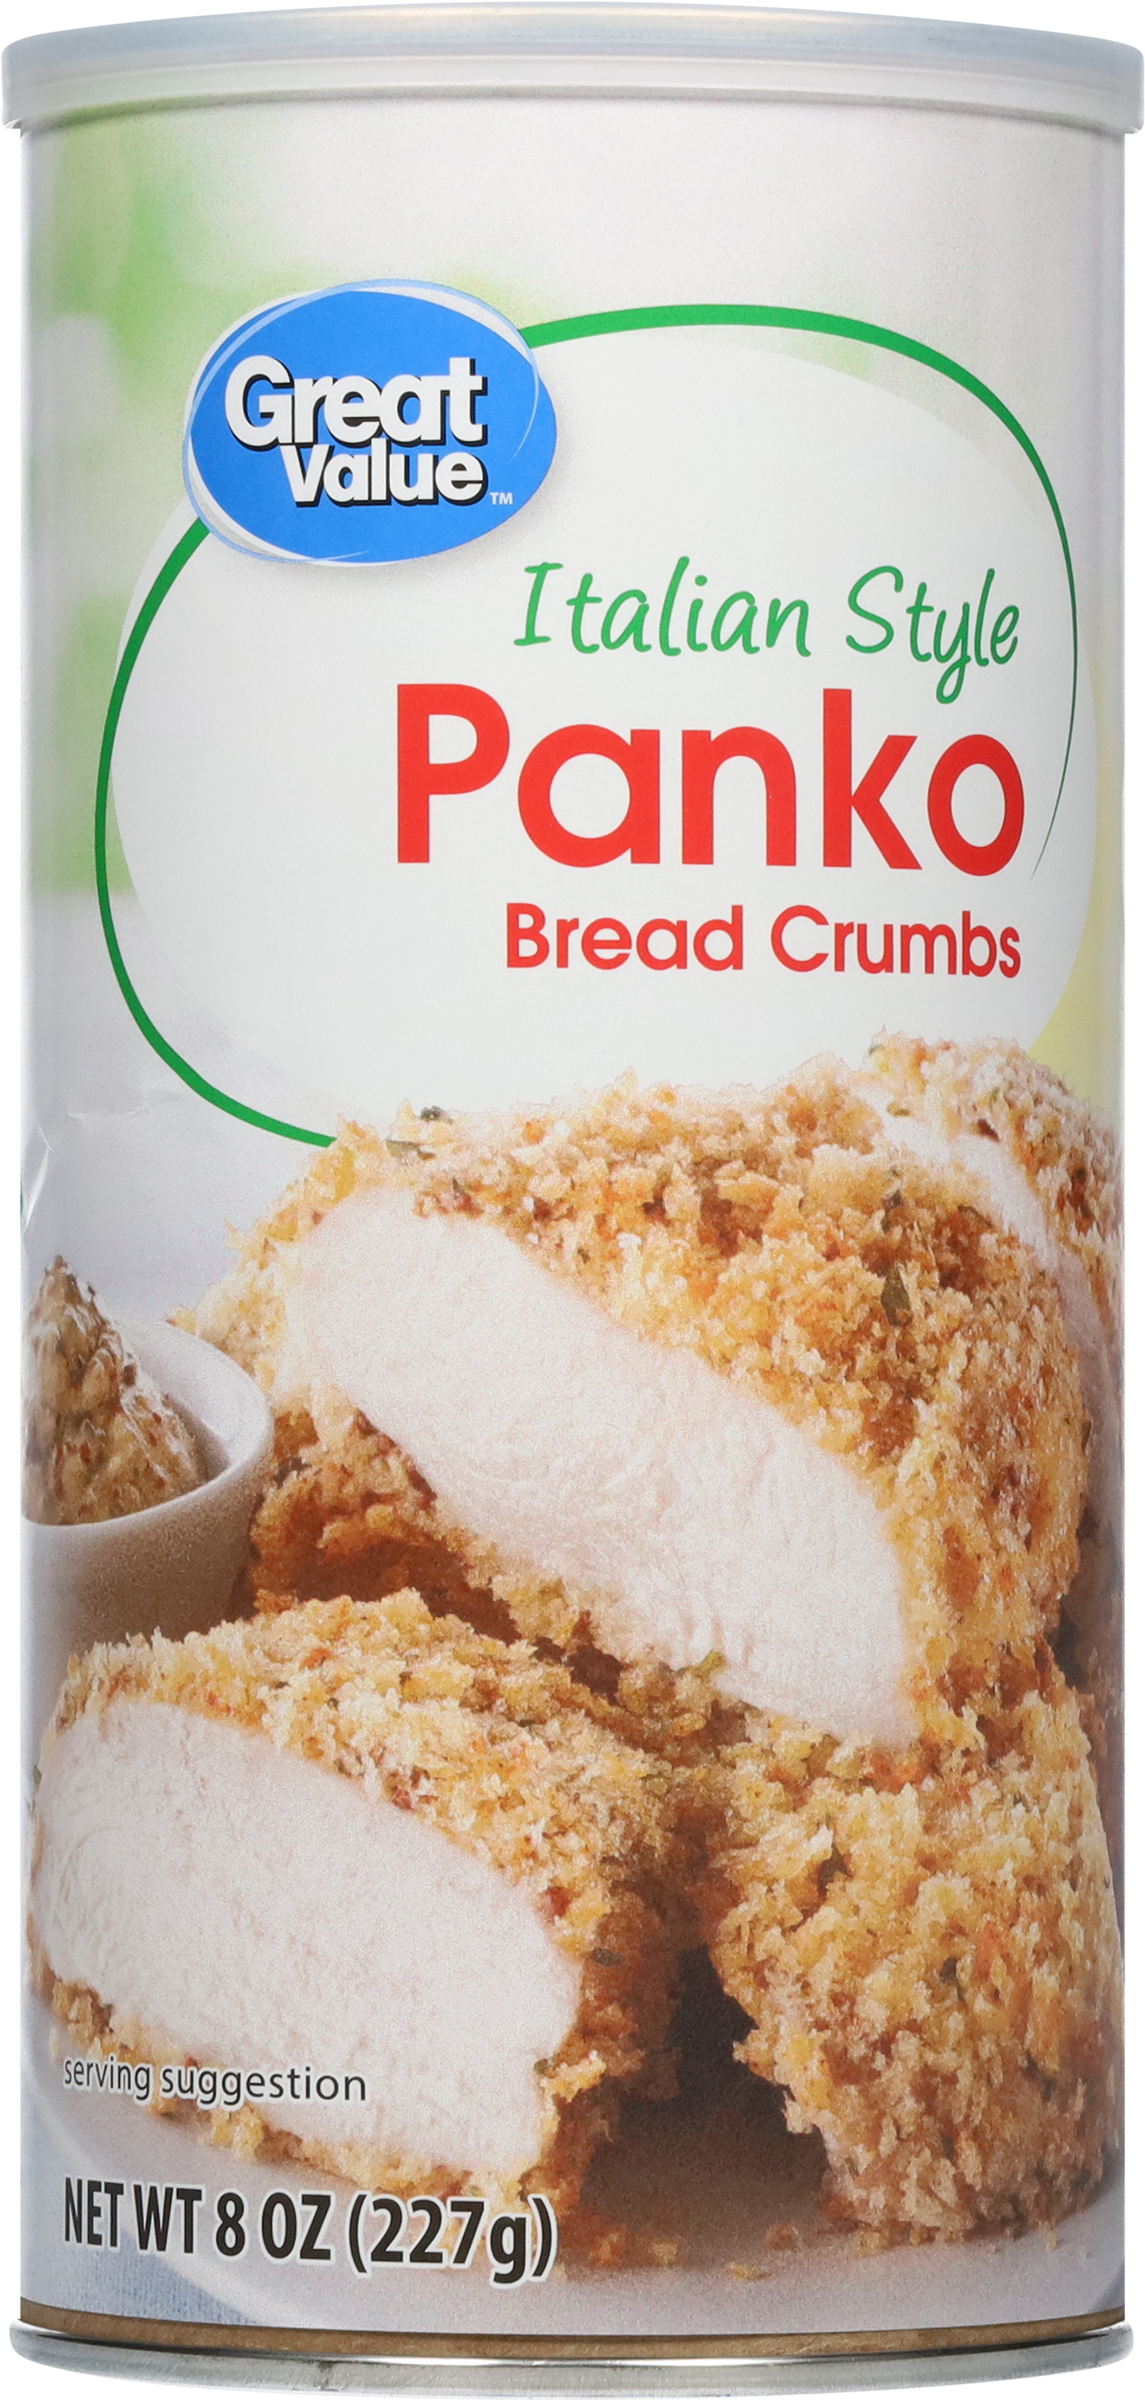 Great Value Italian Style Panko Bread Crumbs, 8 oz - image 3 of 12